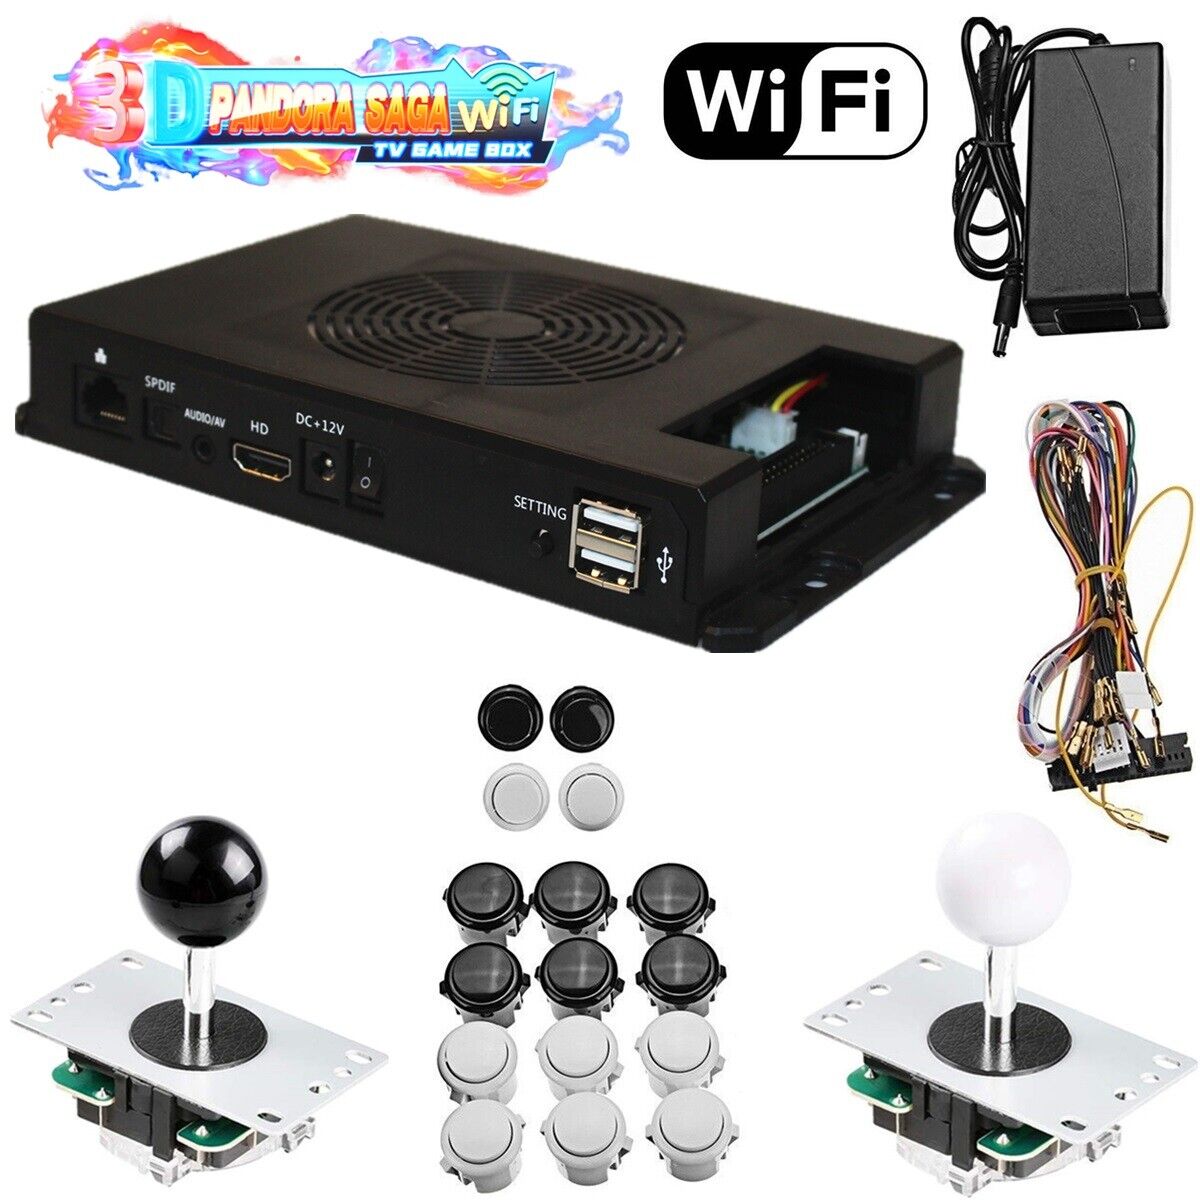 DC 12V Pandora SAGA Wifi TV Game Box 2-Players Retro Arcade Full Download Games